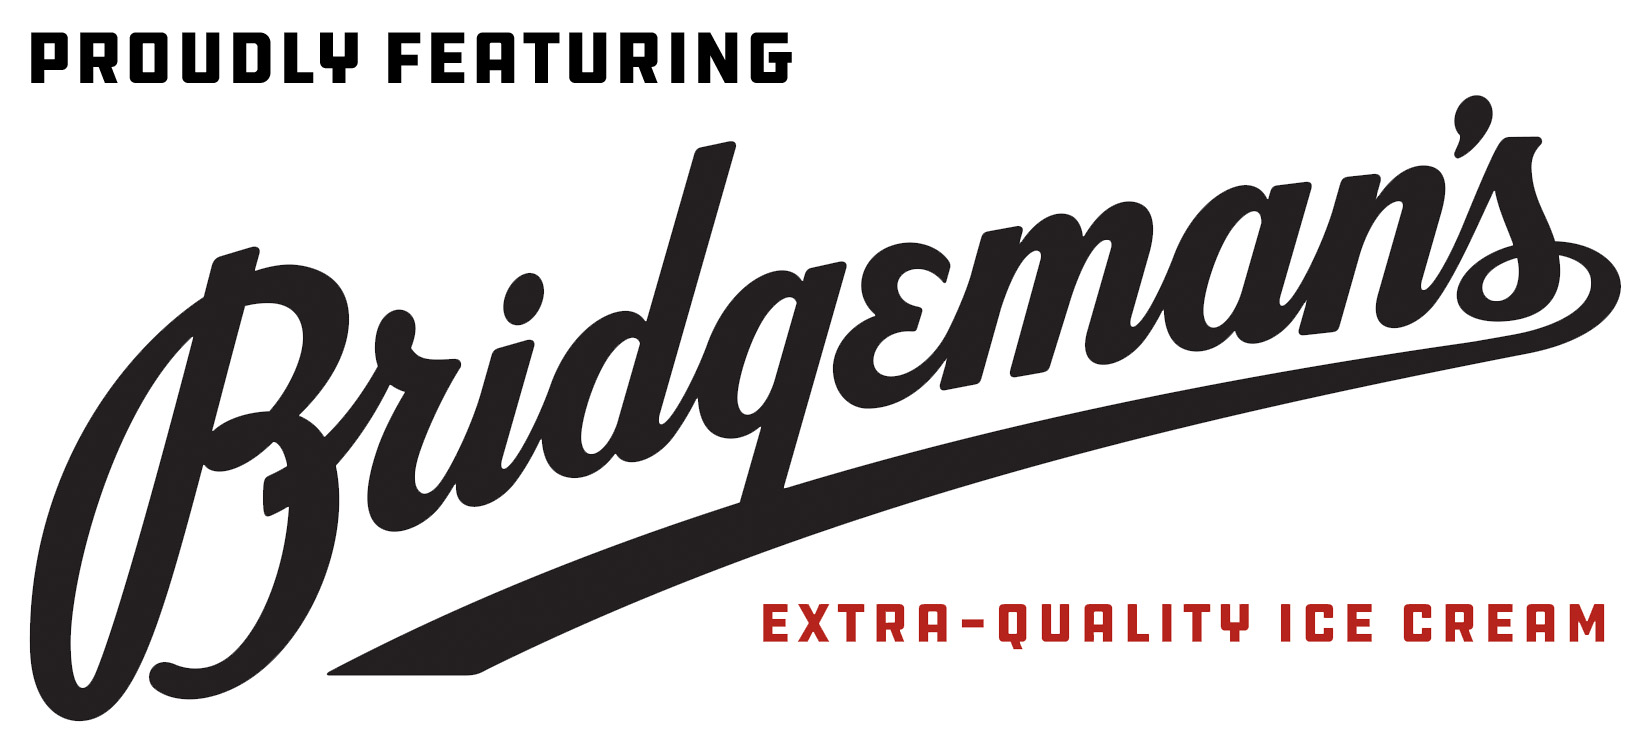 We are proudly featuring Bridgeman's Ice Cream - Logo